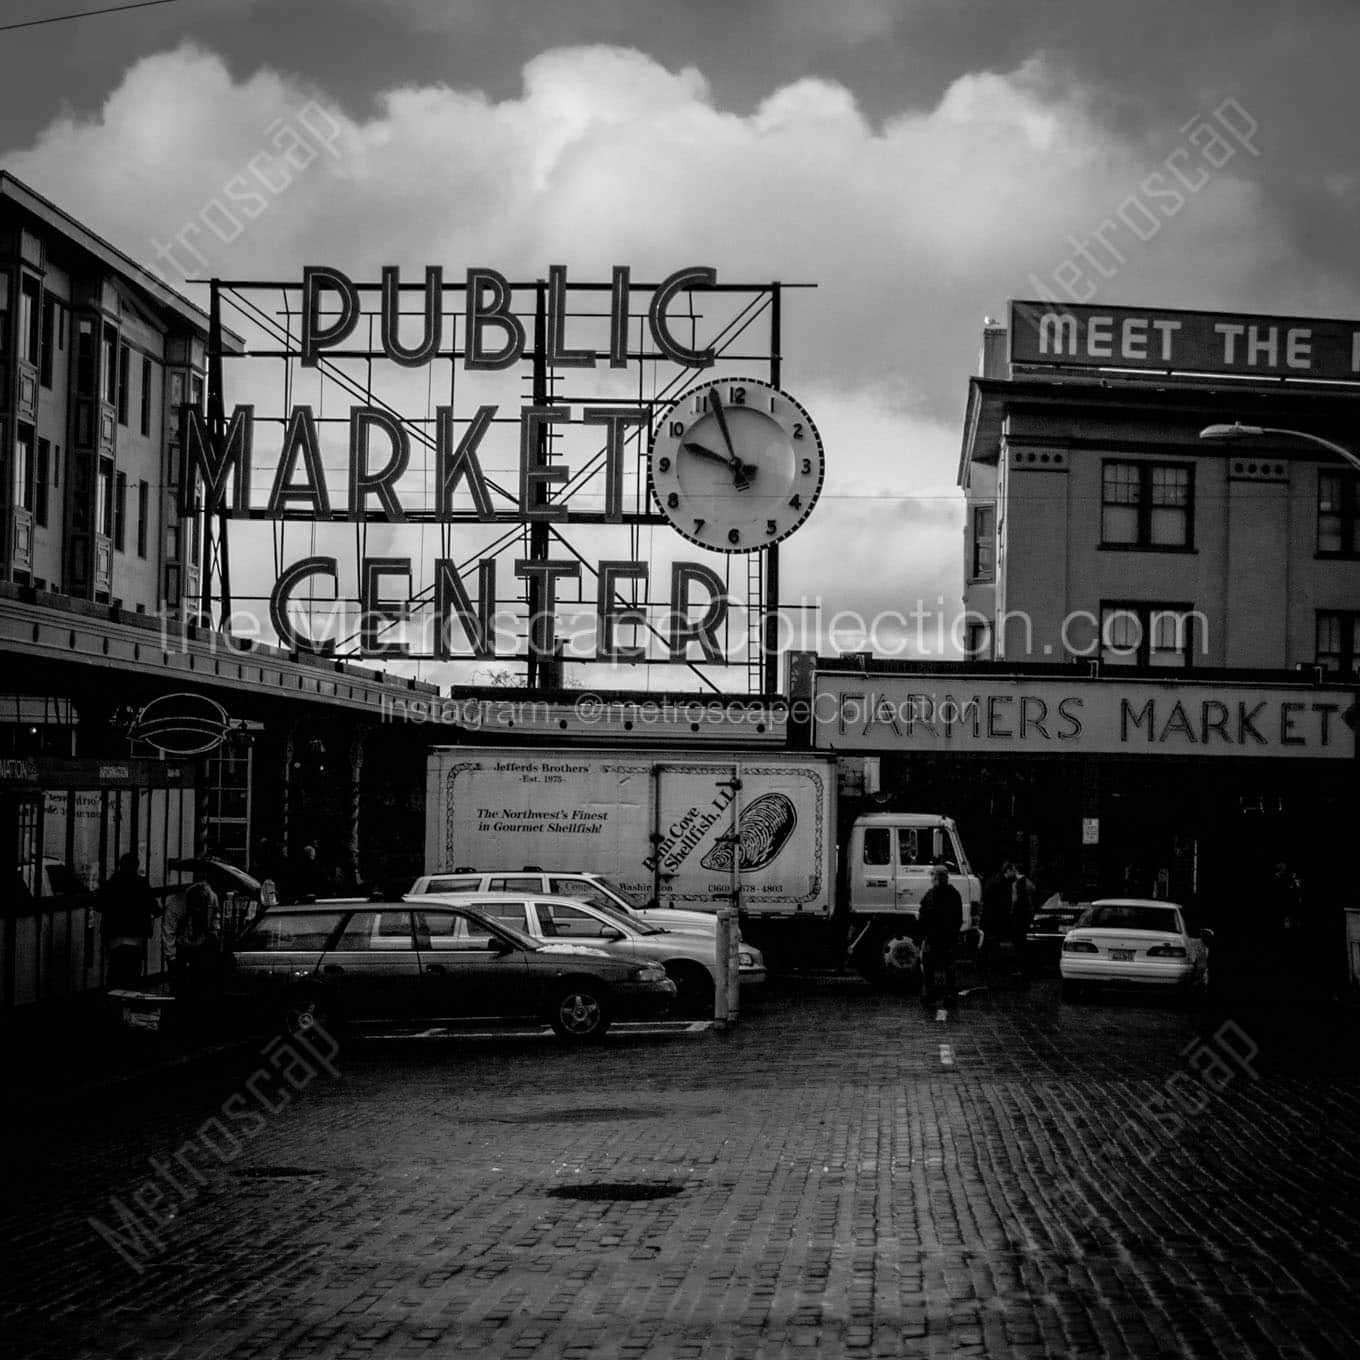 public market center sign Black & White Wall Art